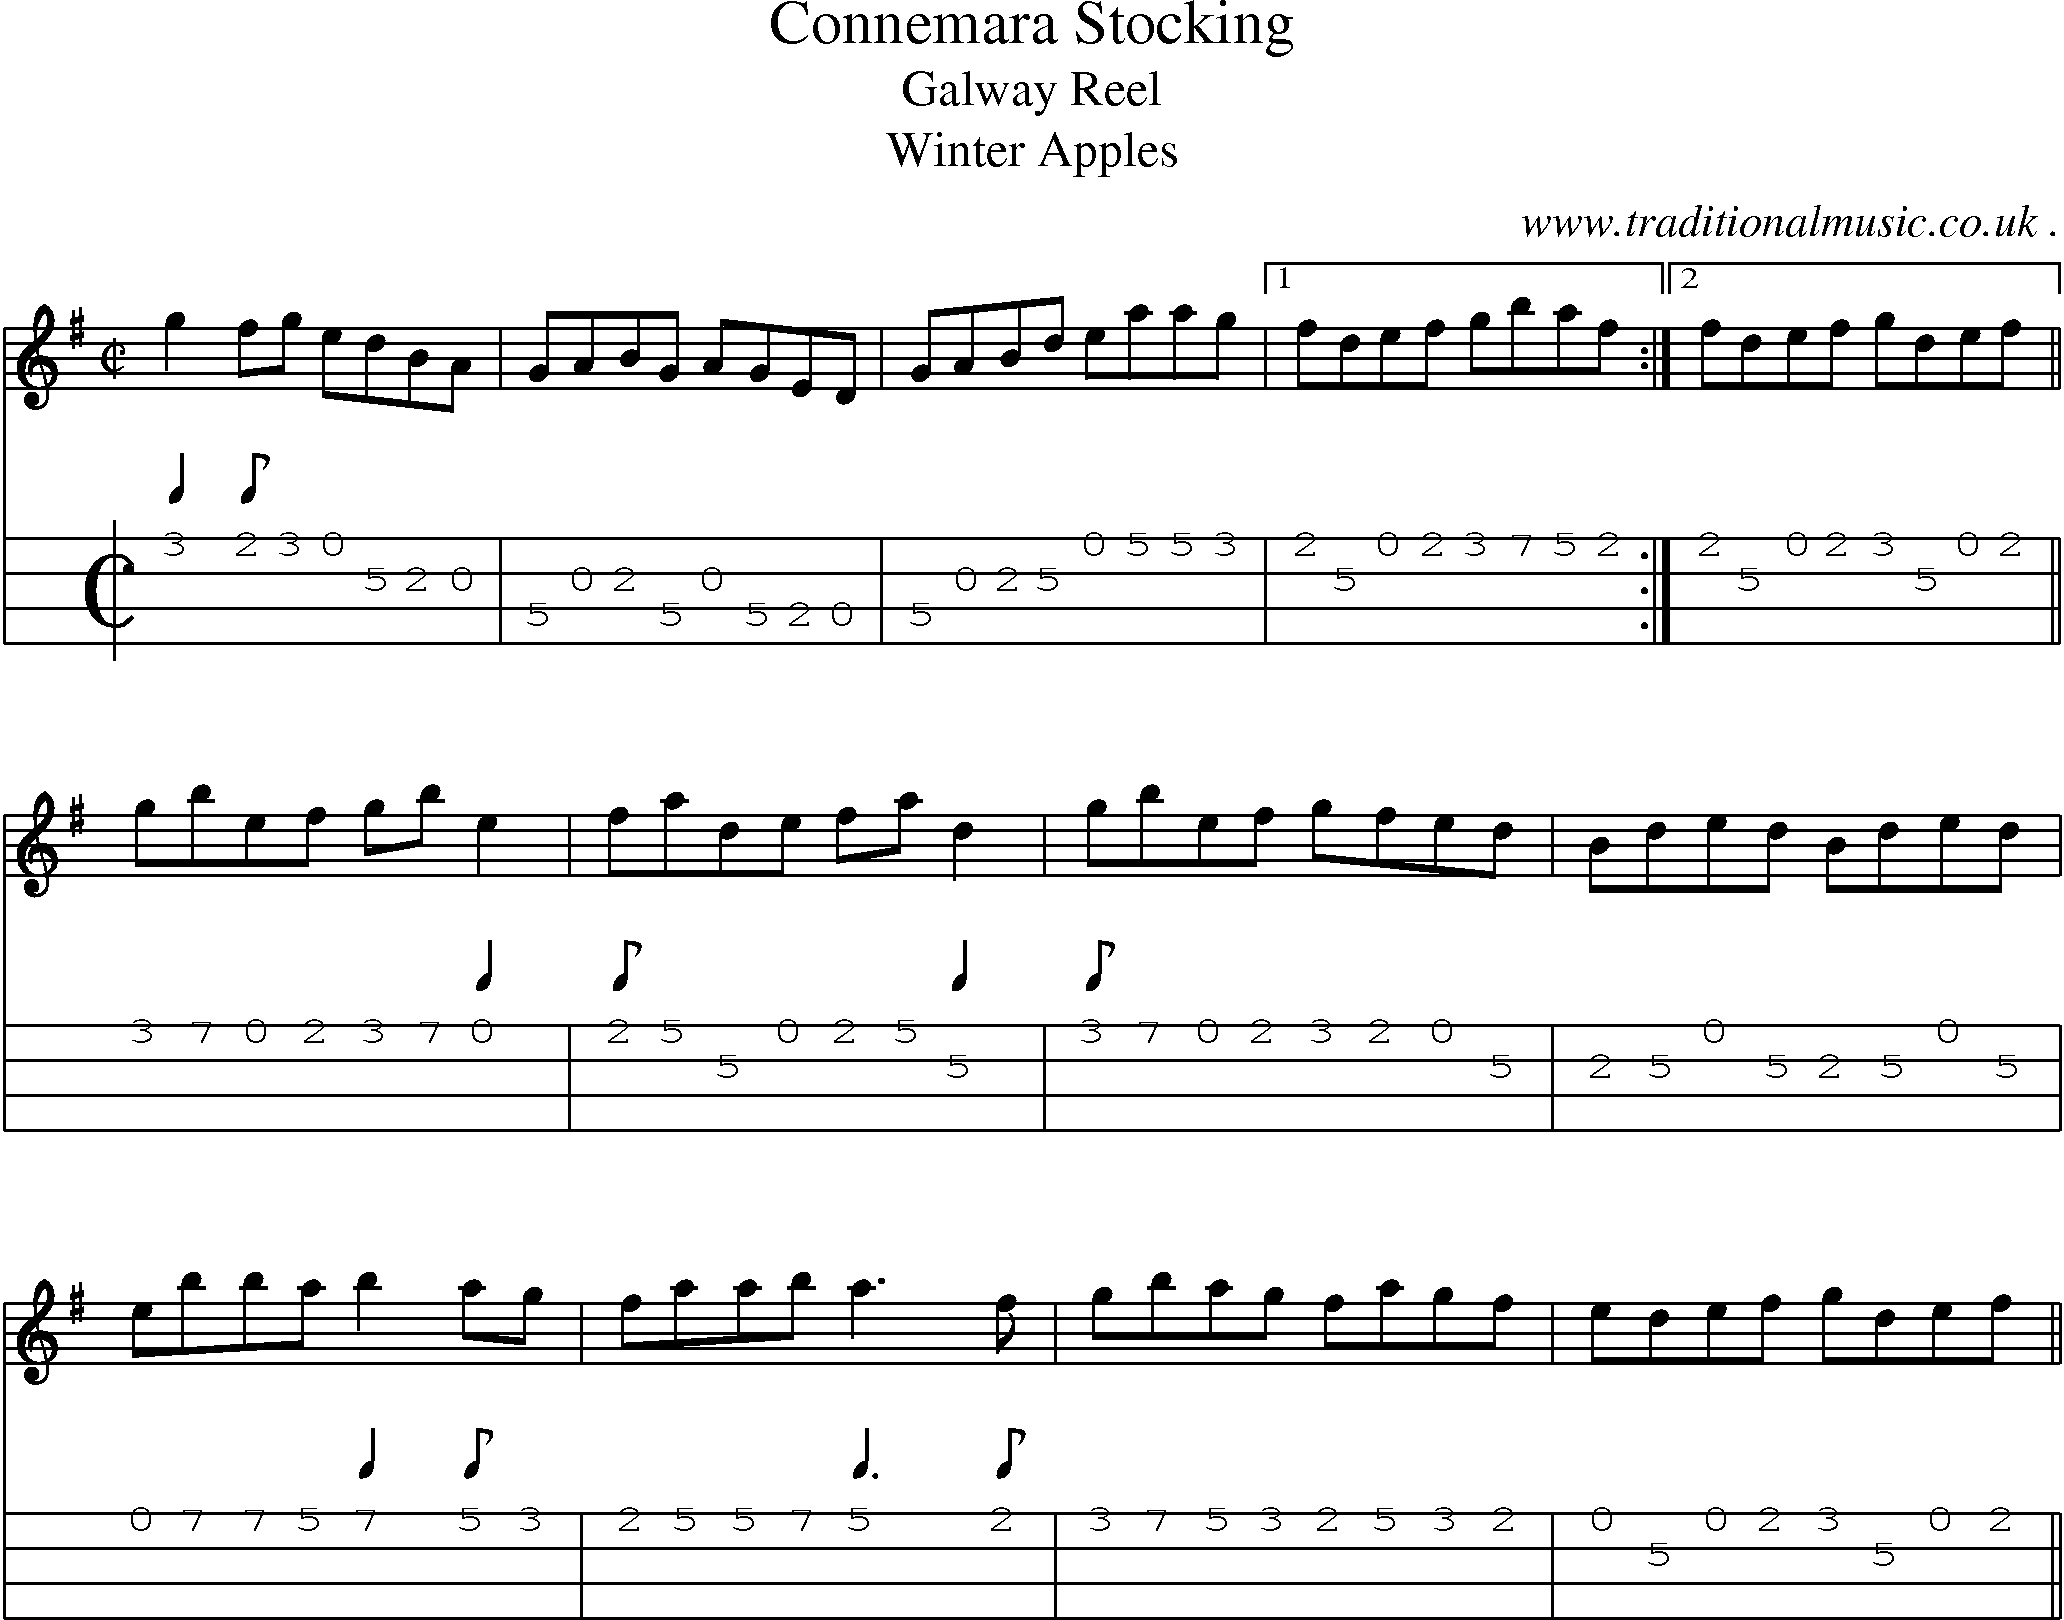 Sheet-Music and Mandolin Tabs for Connemara Stocking